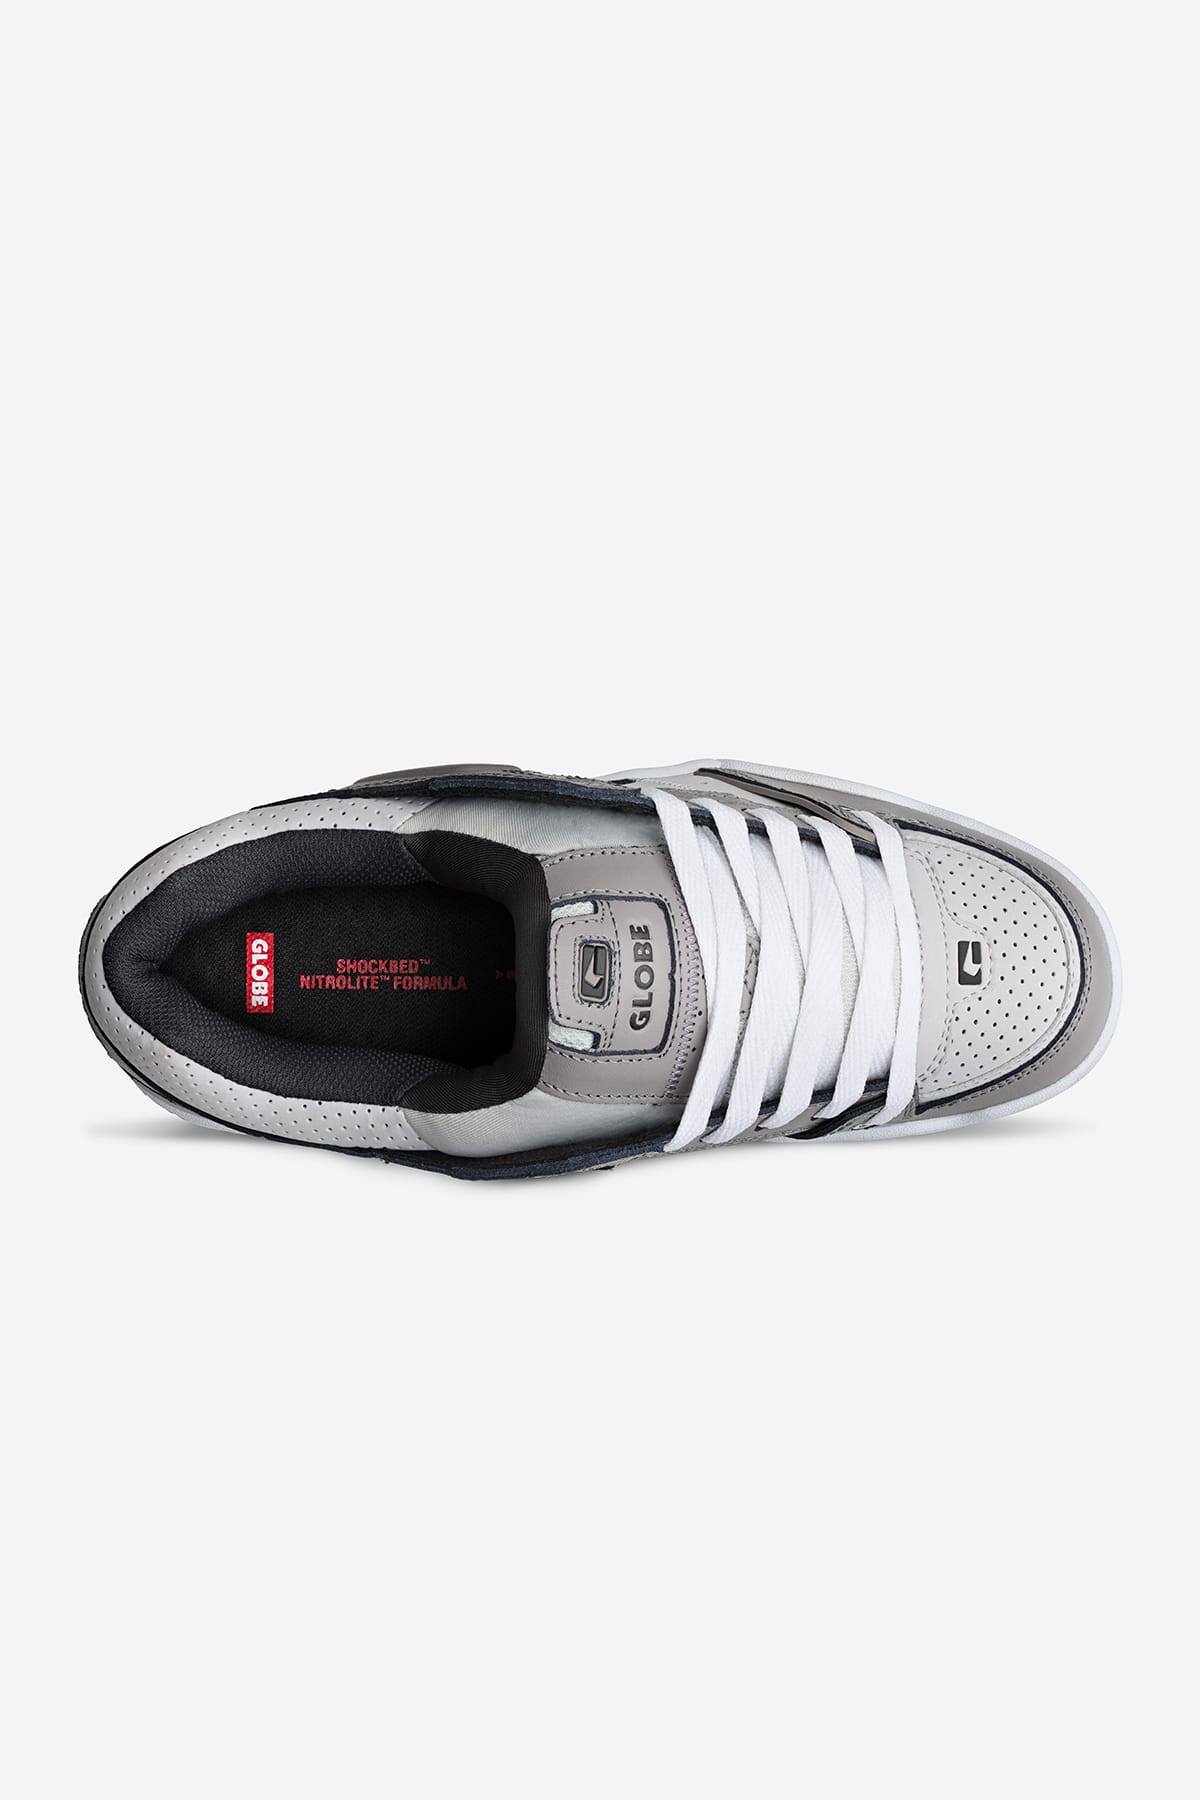 fusion grey fade skate shoes